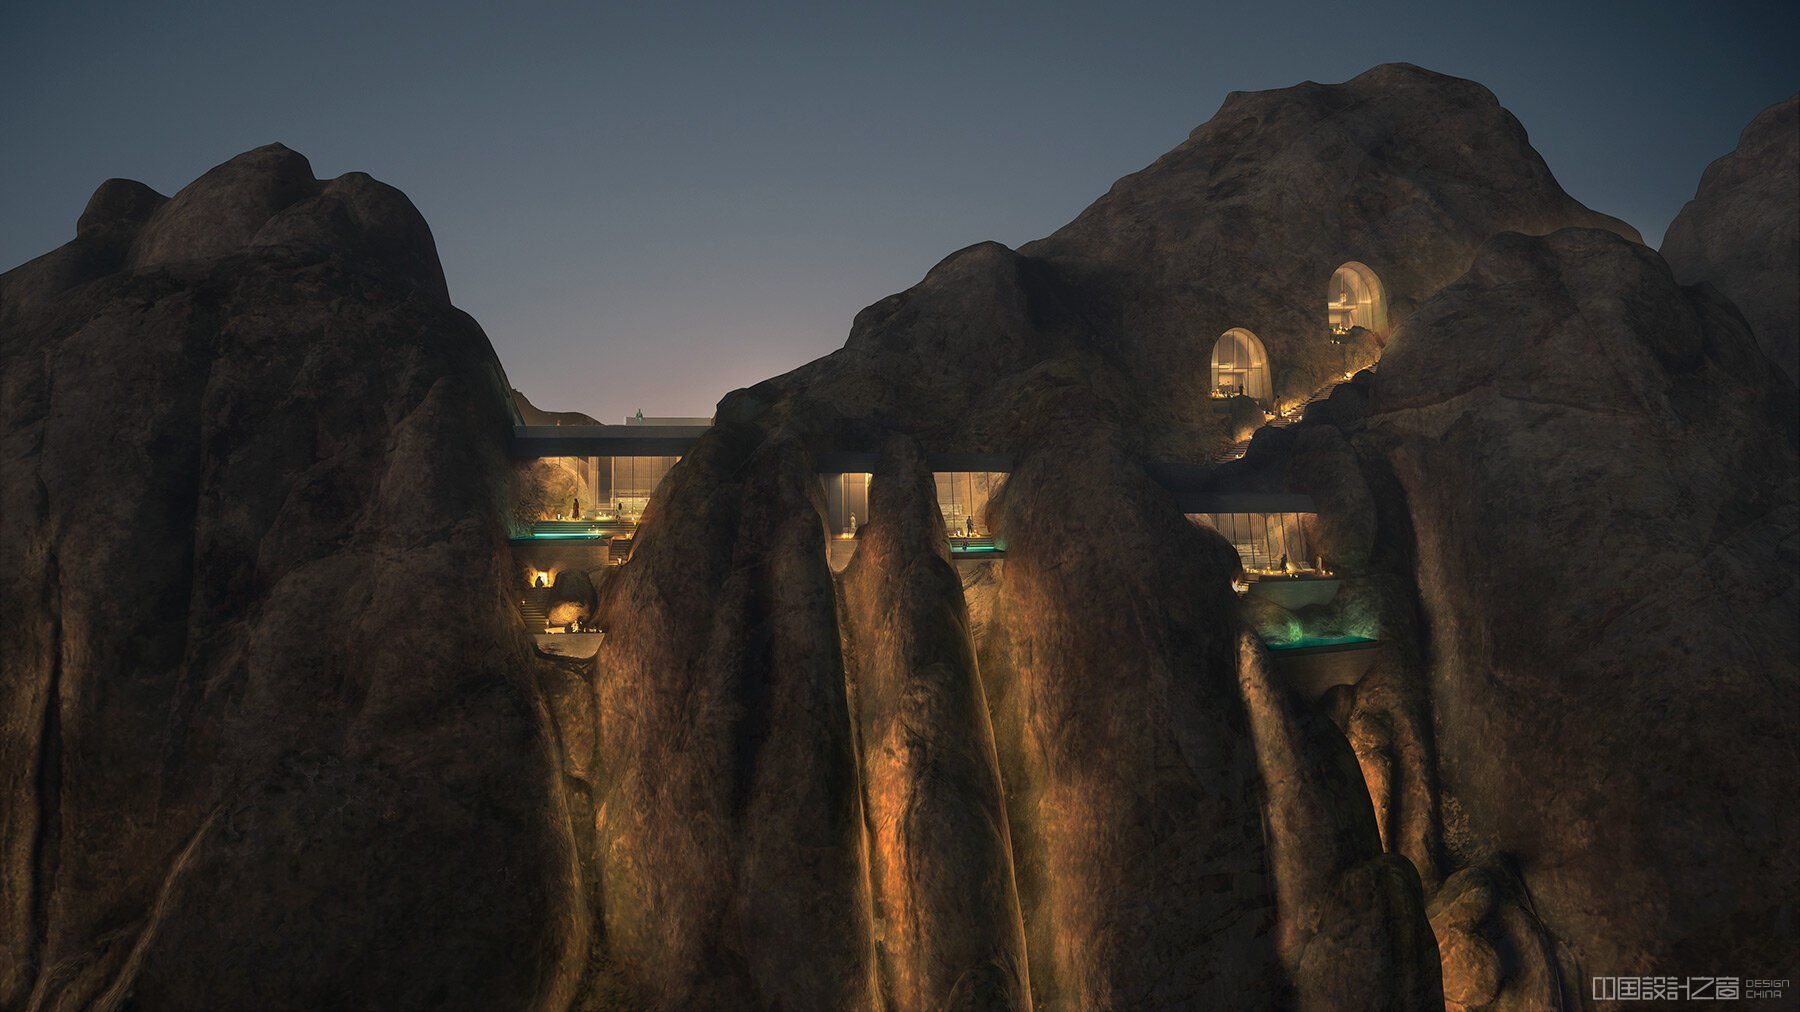 oppenheim architecture breaks ground on desert rock resort in the mountains of saudi arabia